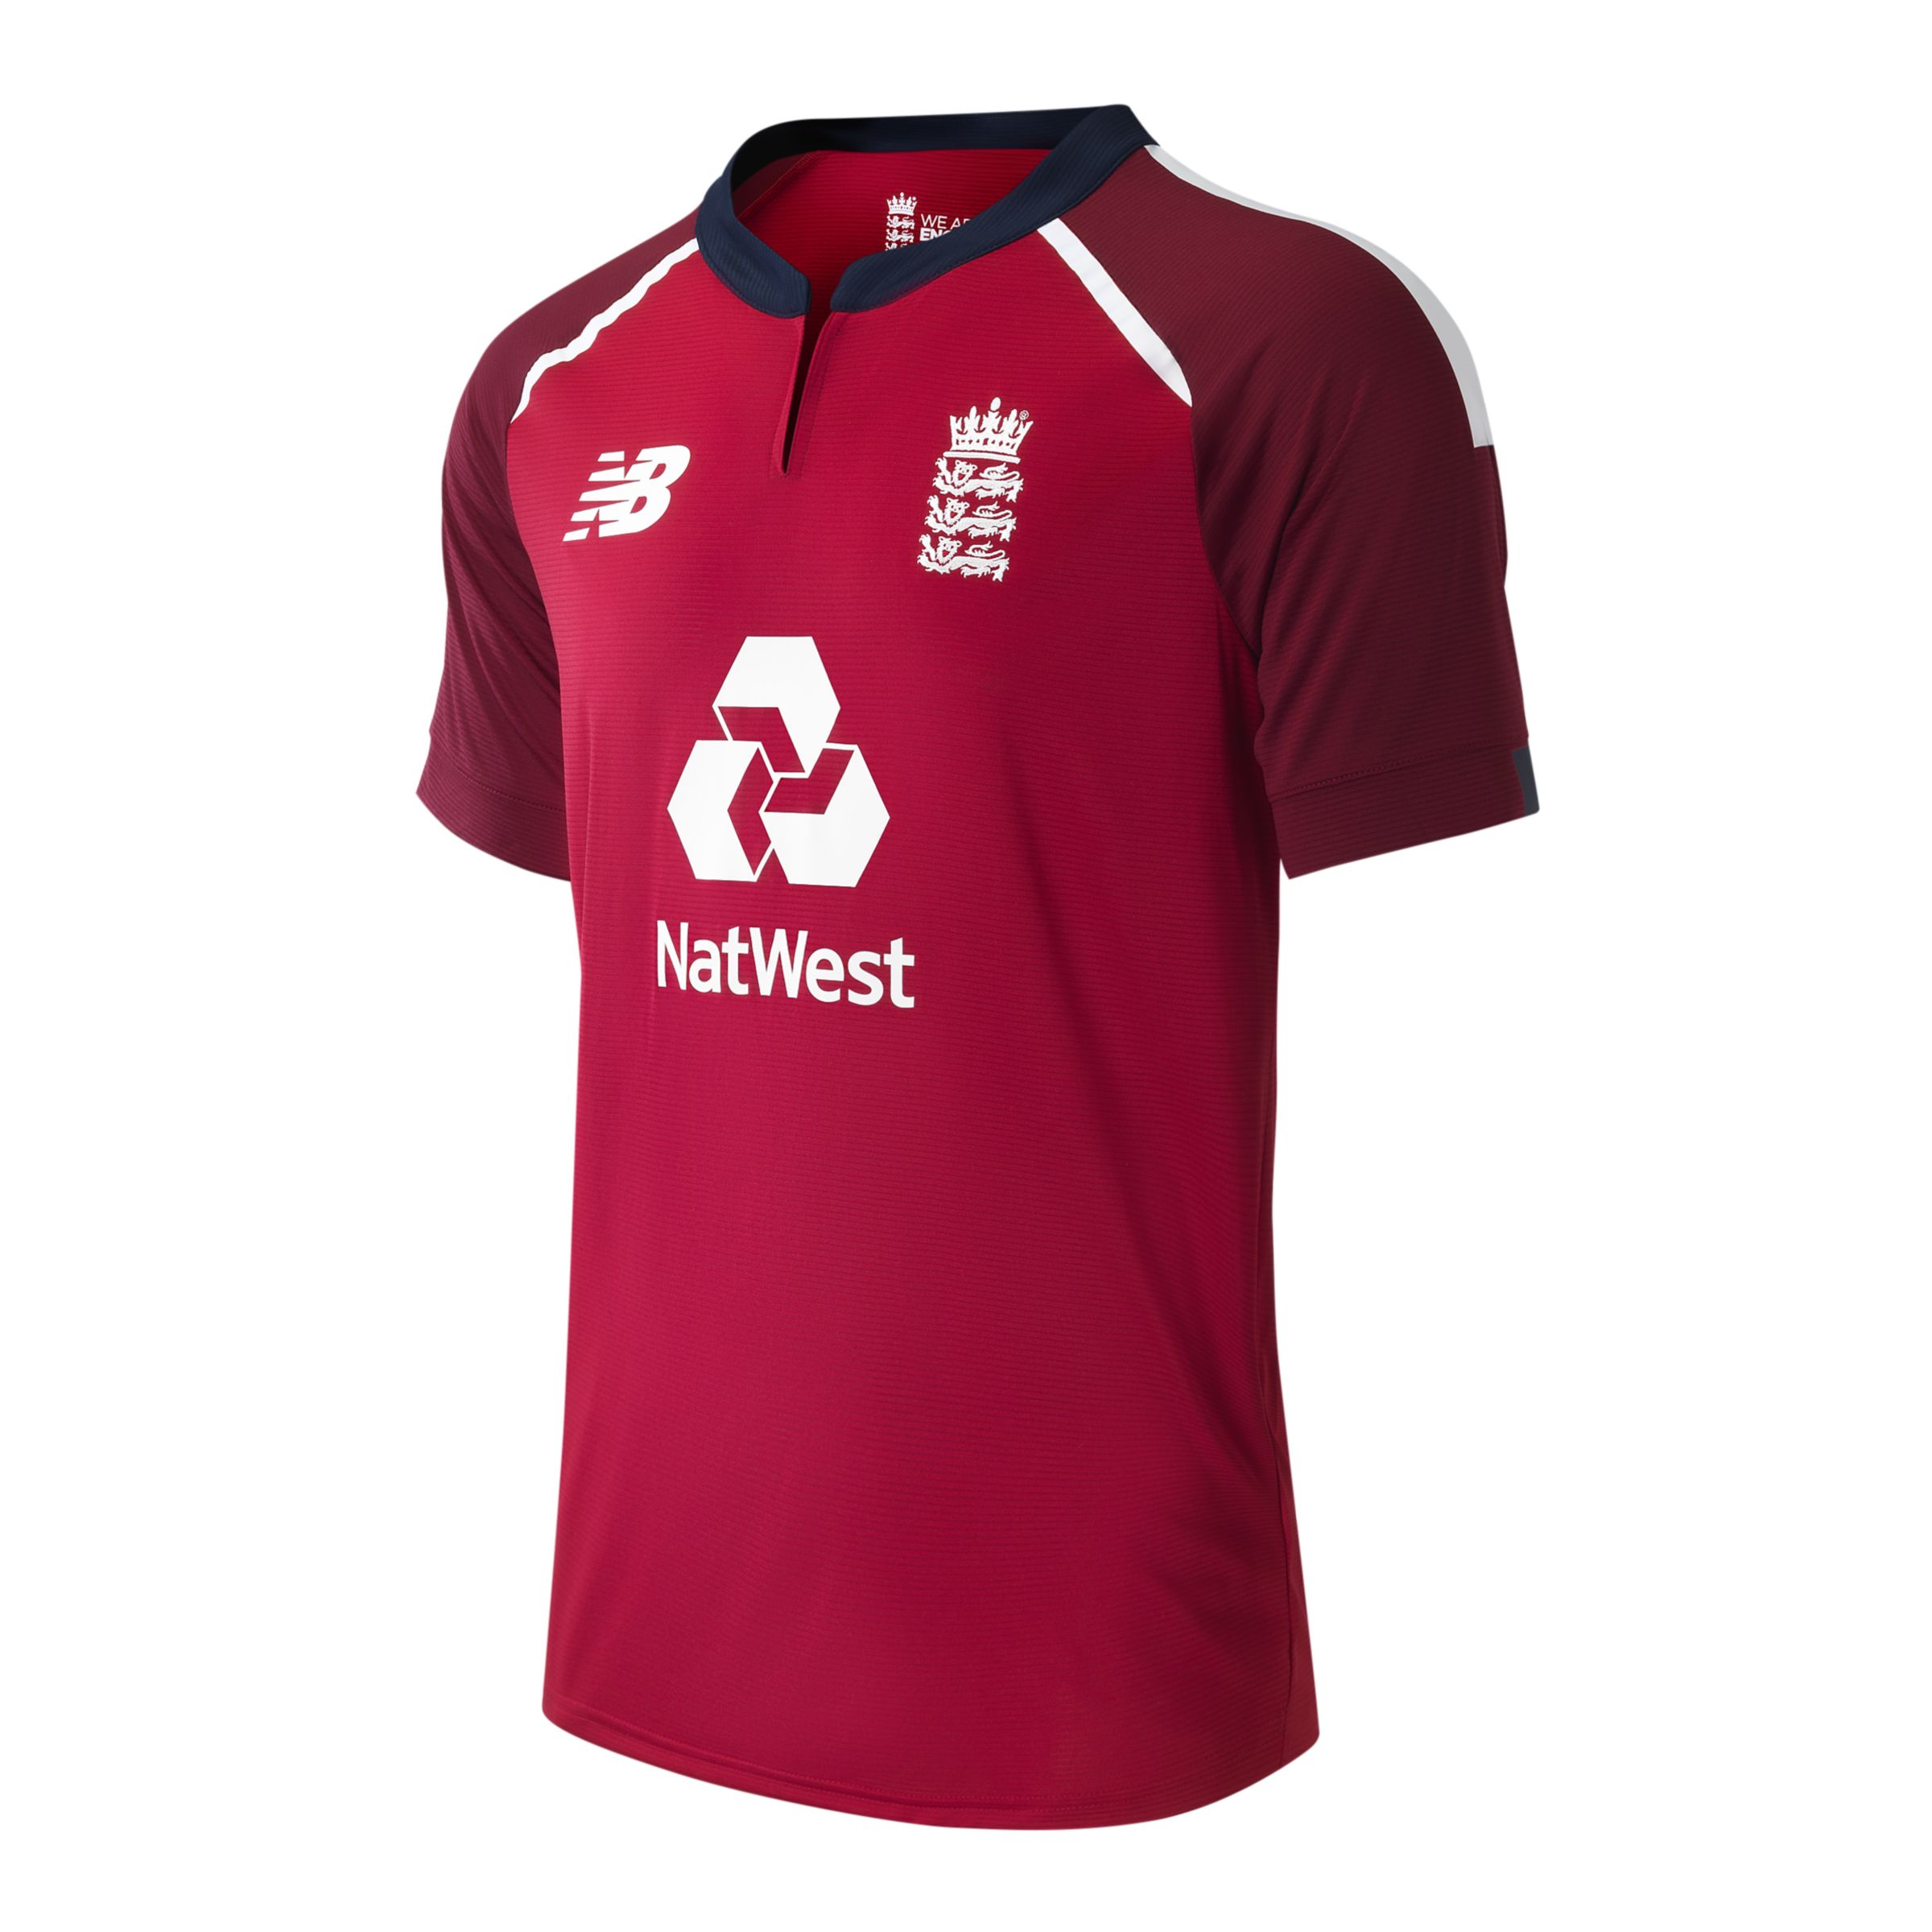 england test cricket shirt